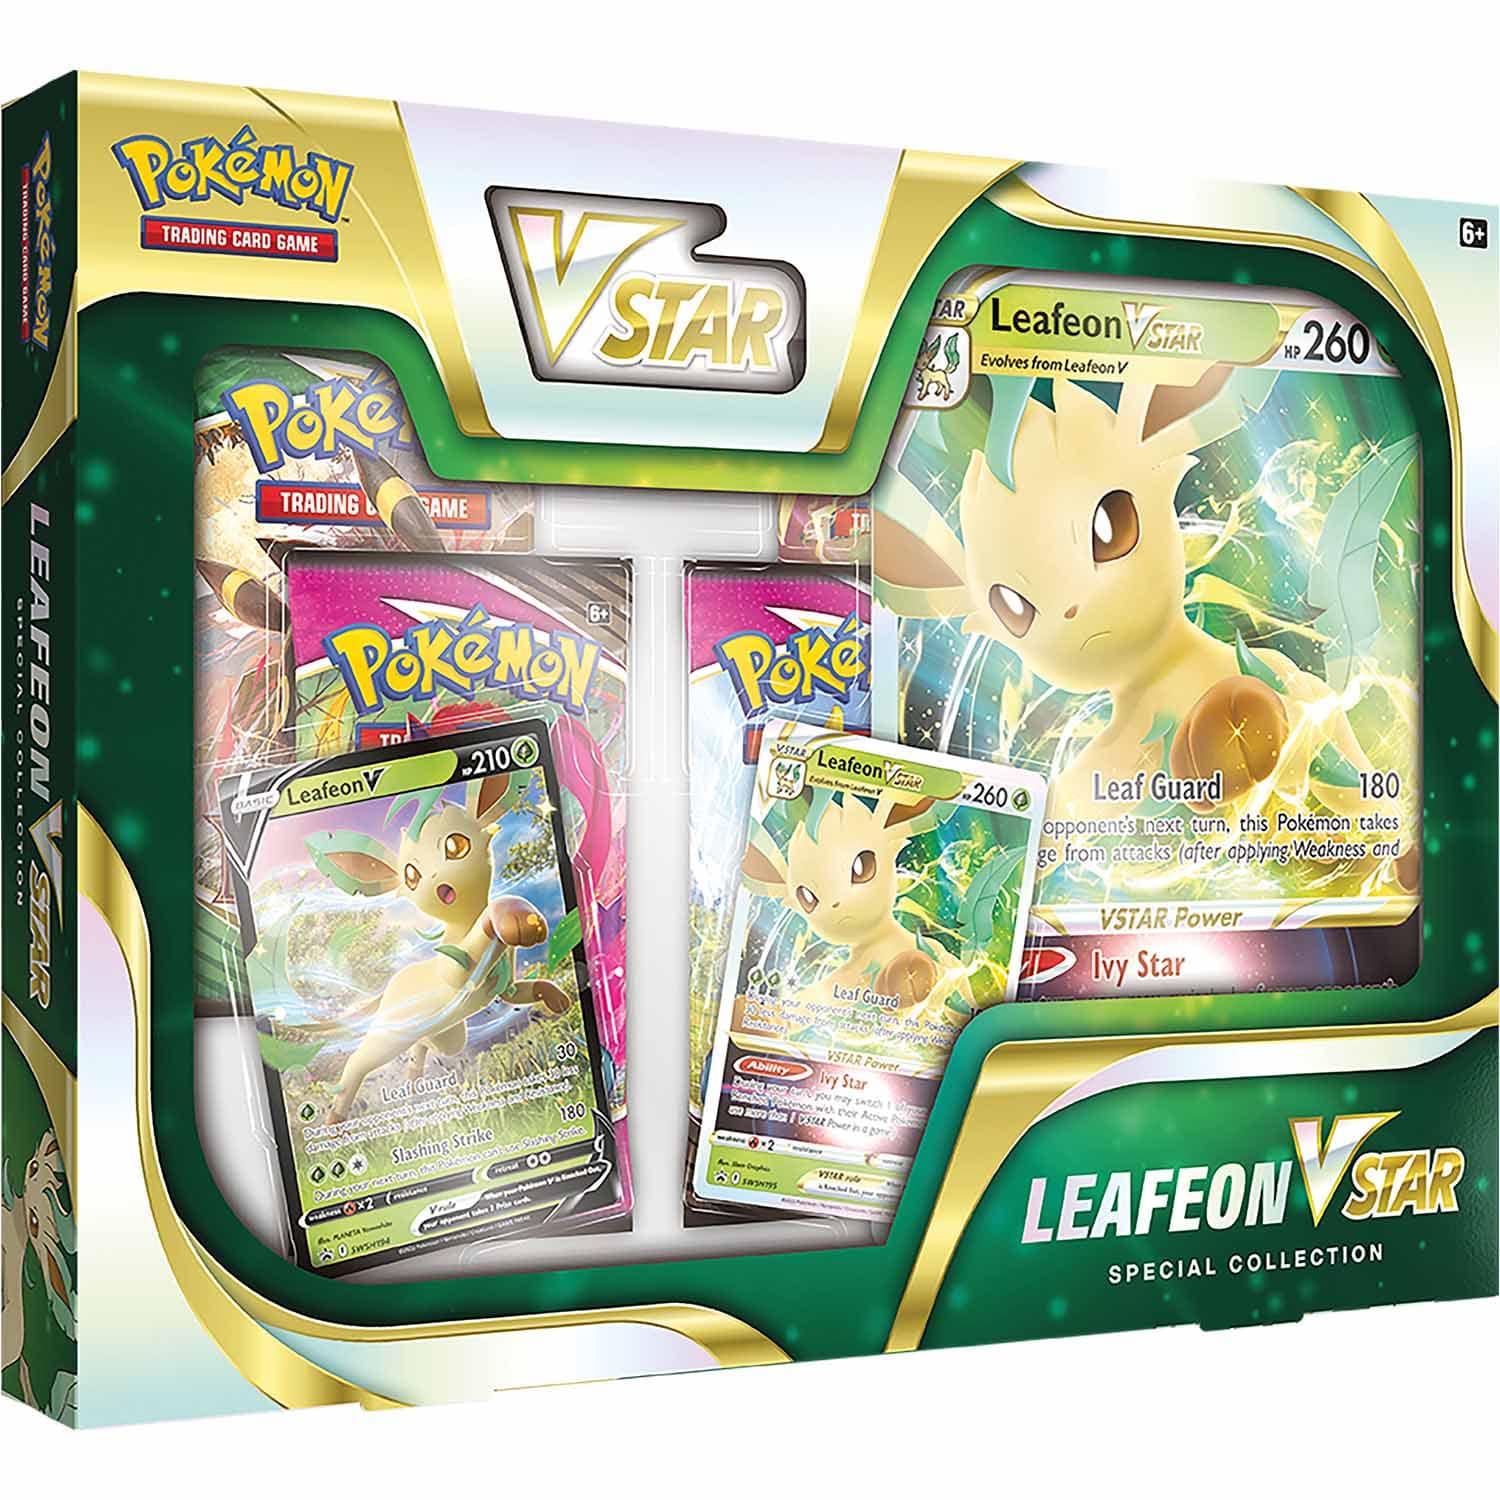 Pokémon Leafeon VSTAR Special Collection Box - EN